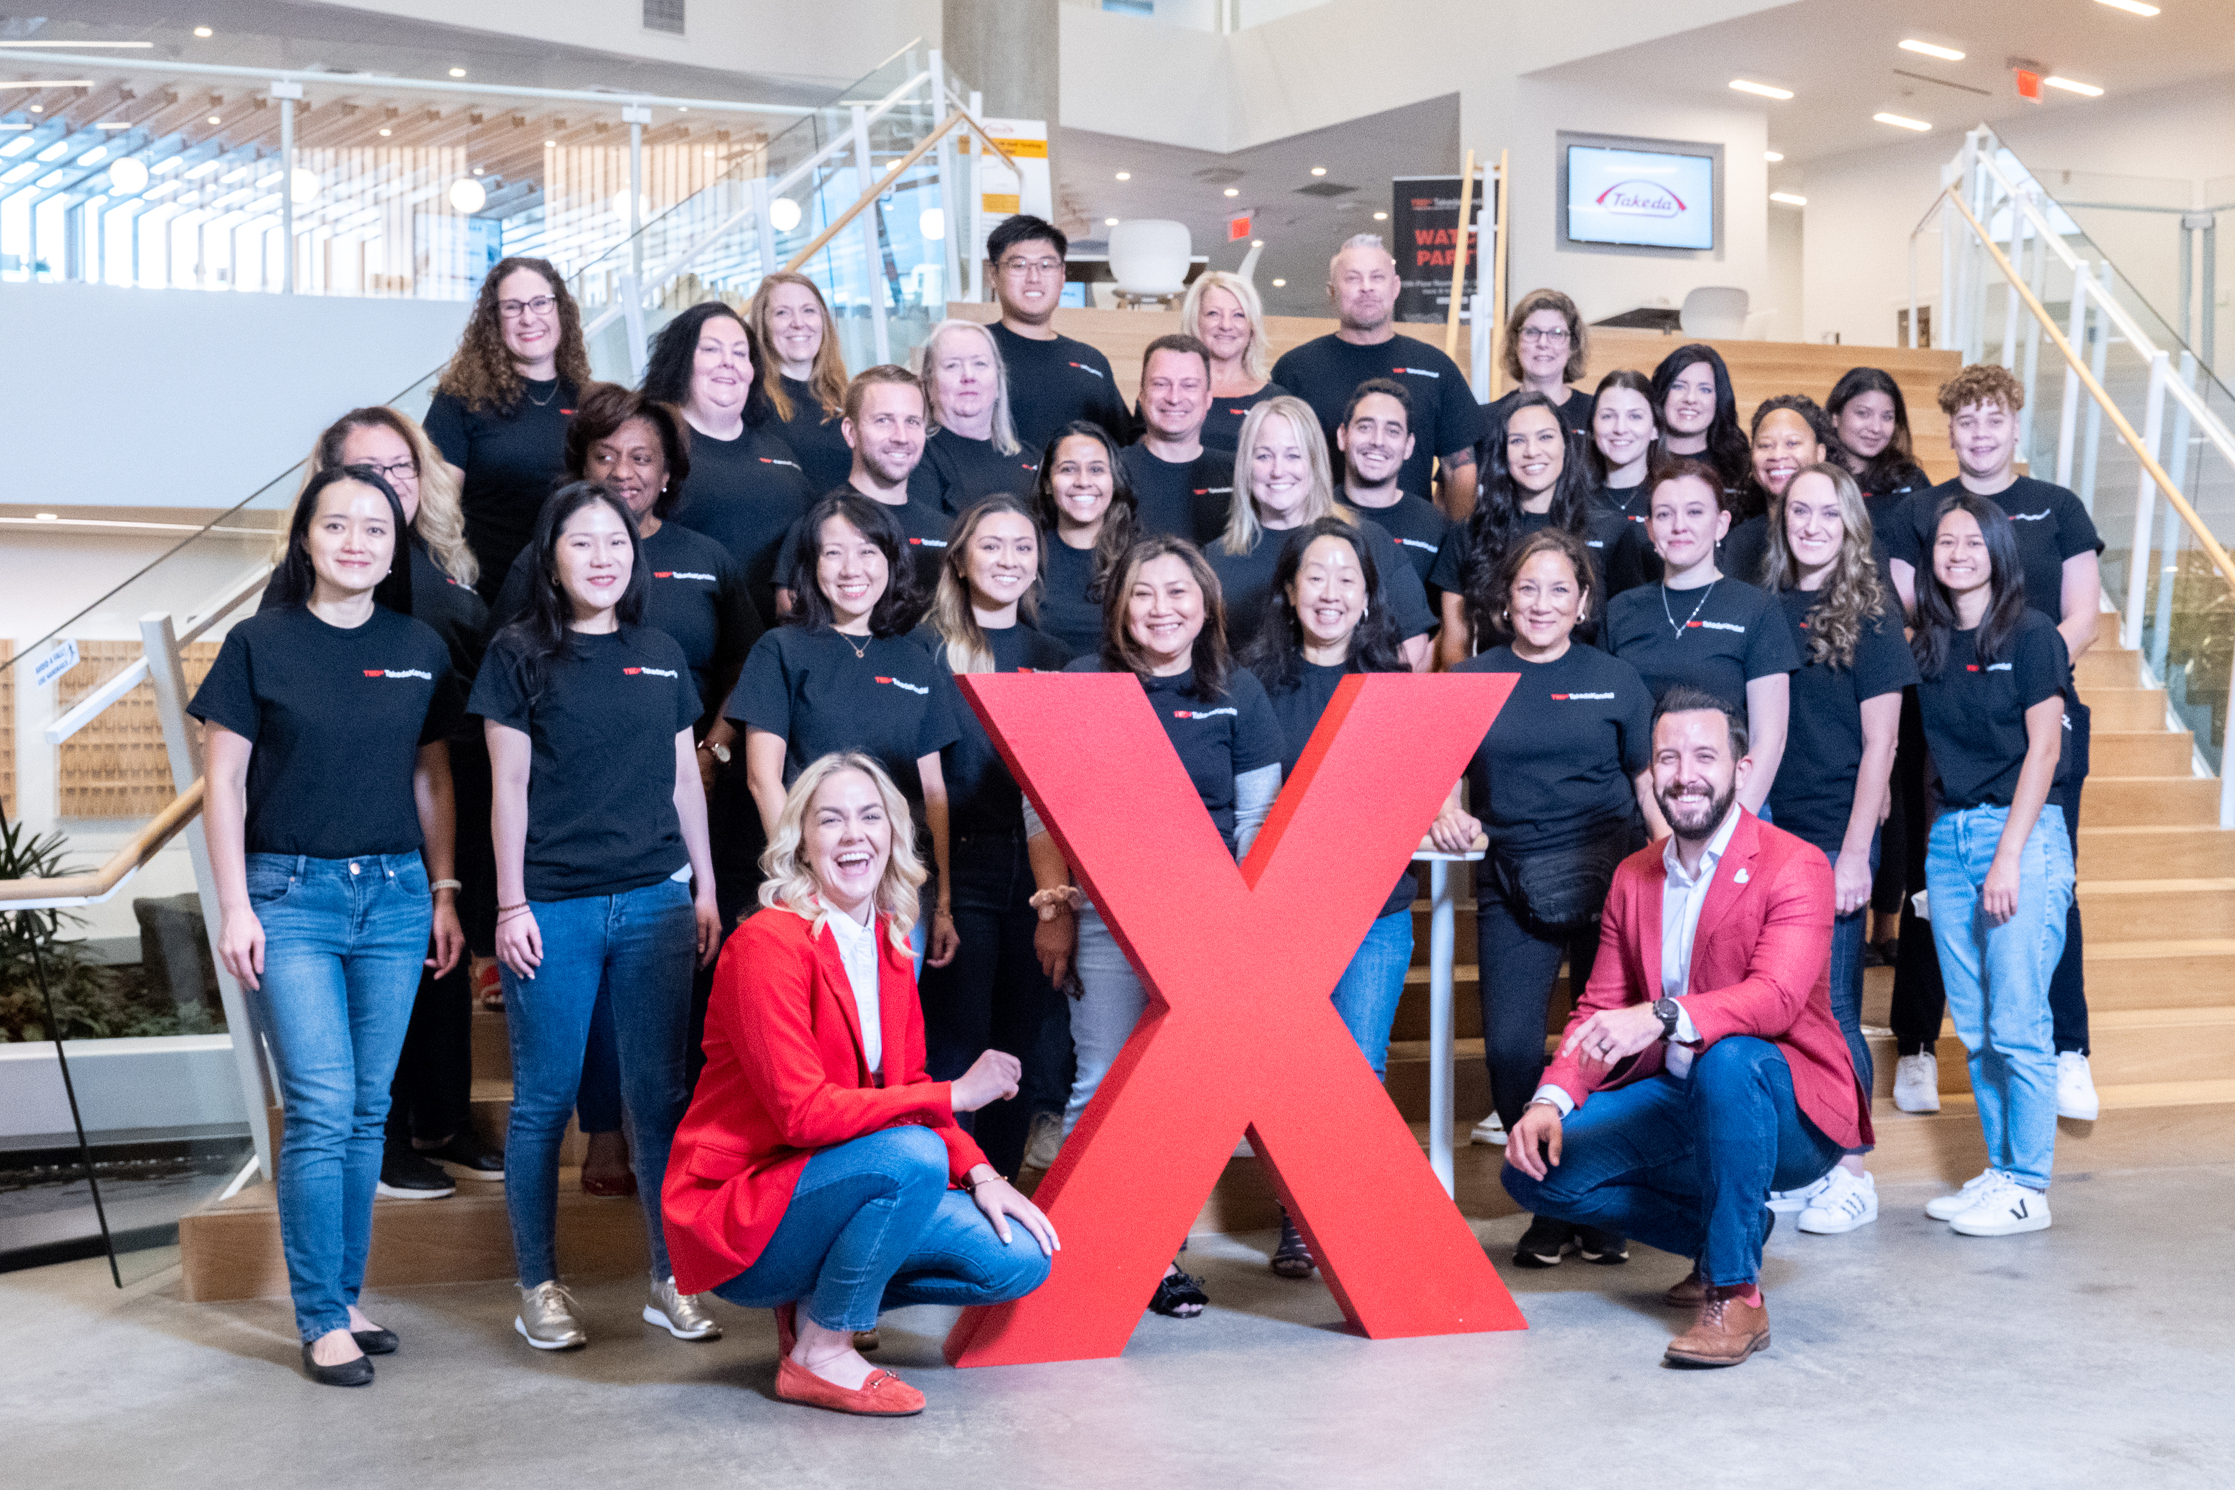 Group photo of TEDx volunteers